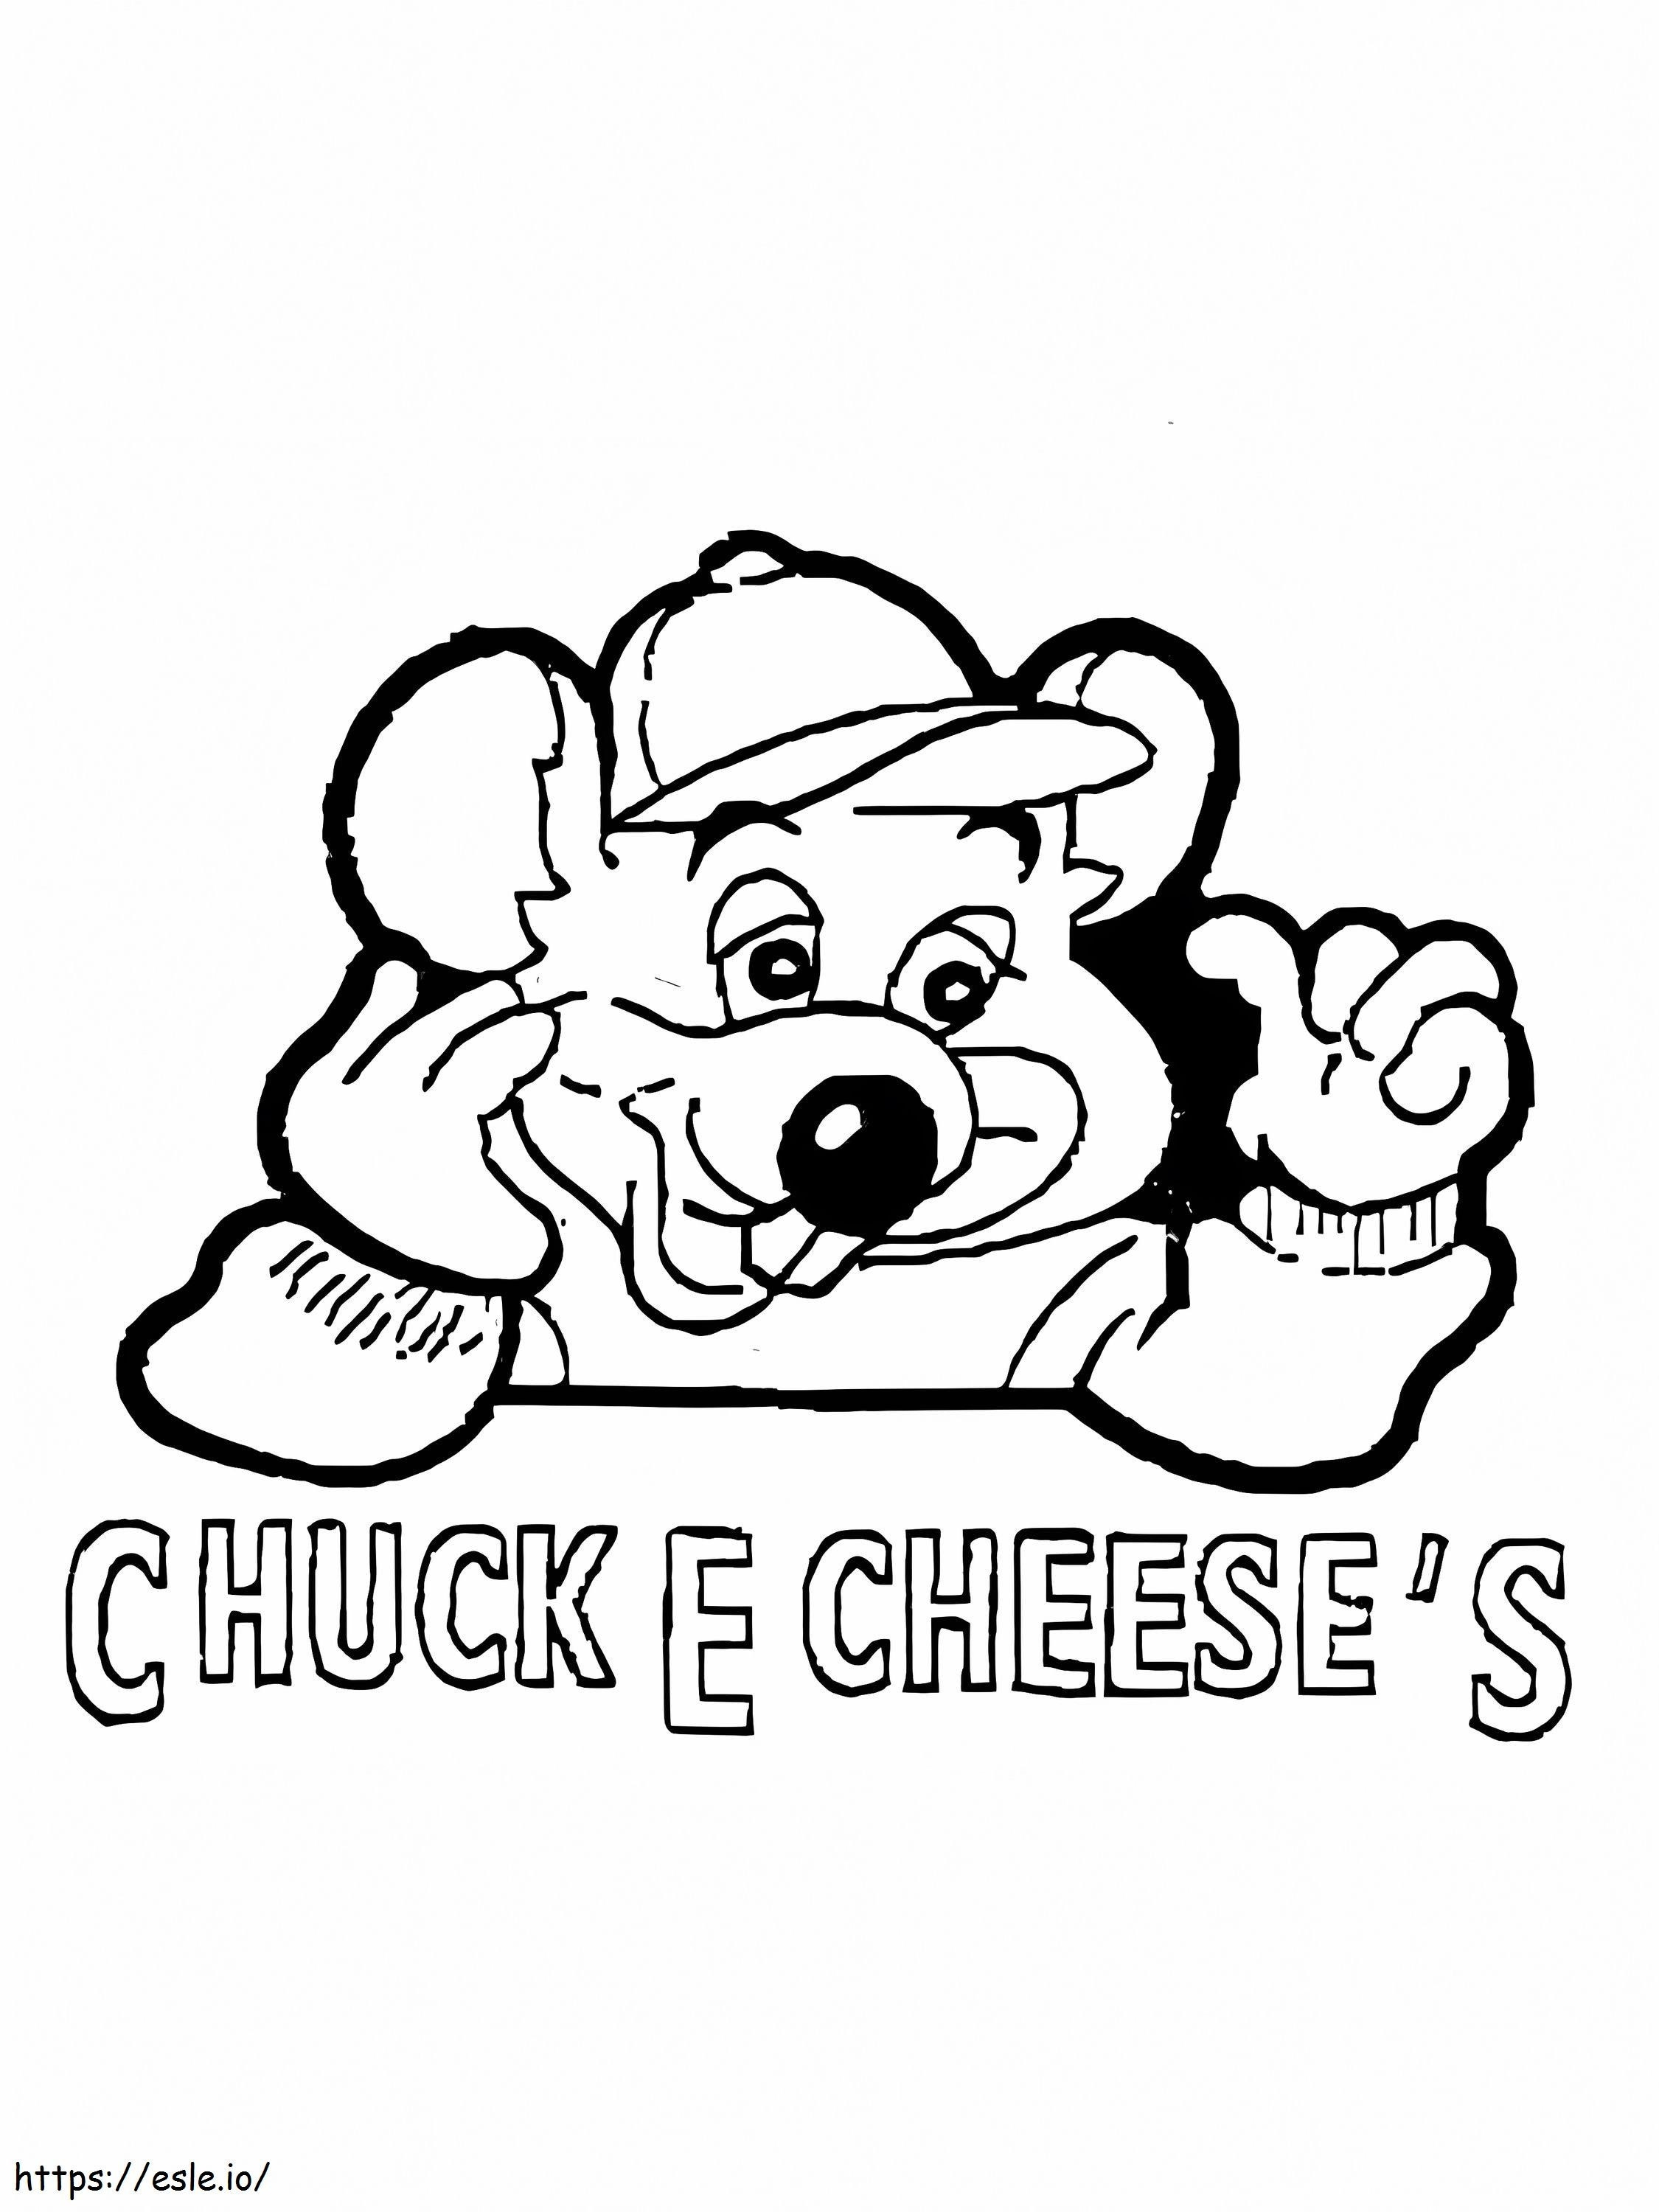 Chuck E. Cheese 7 coloring page